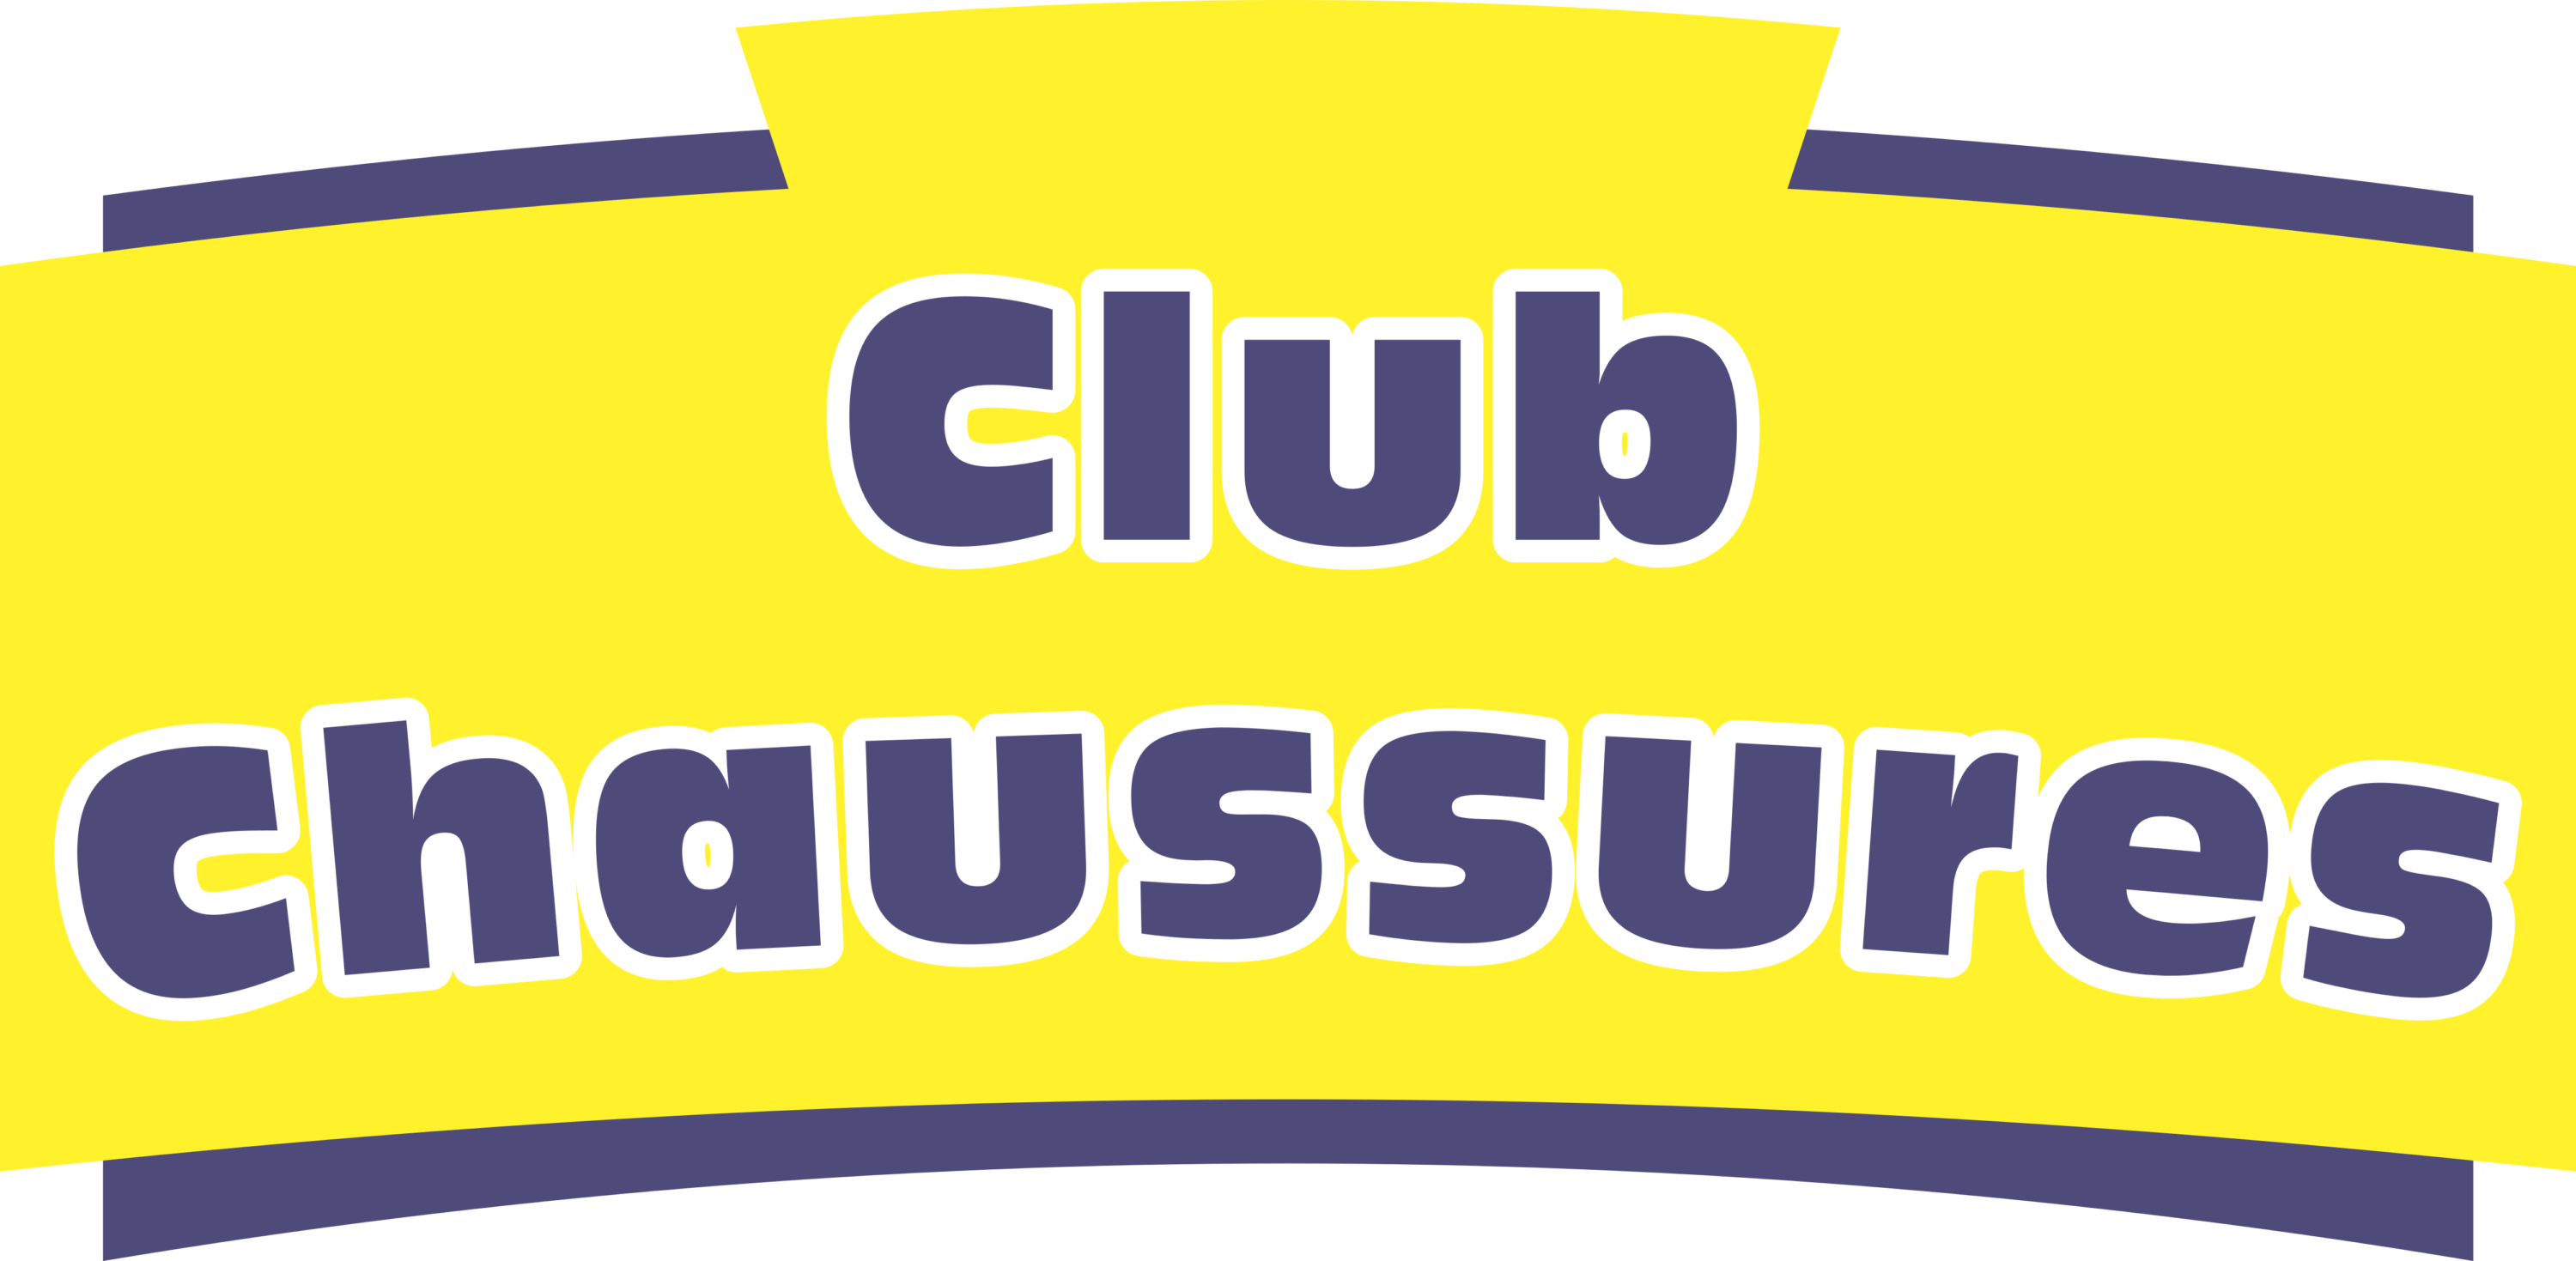 Chaussures Club Logo